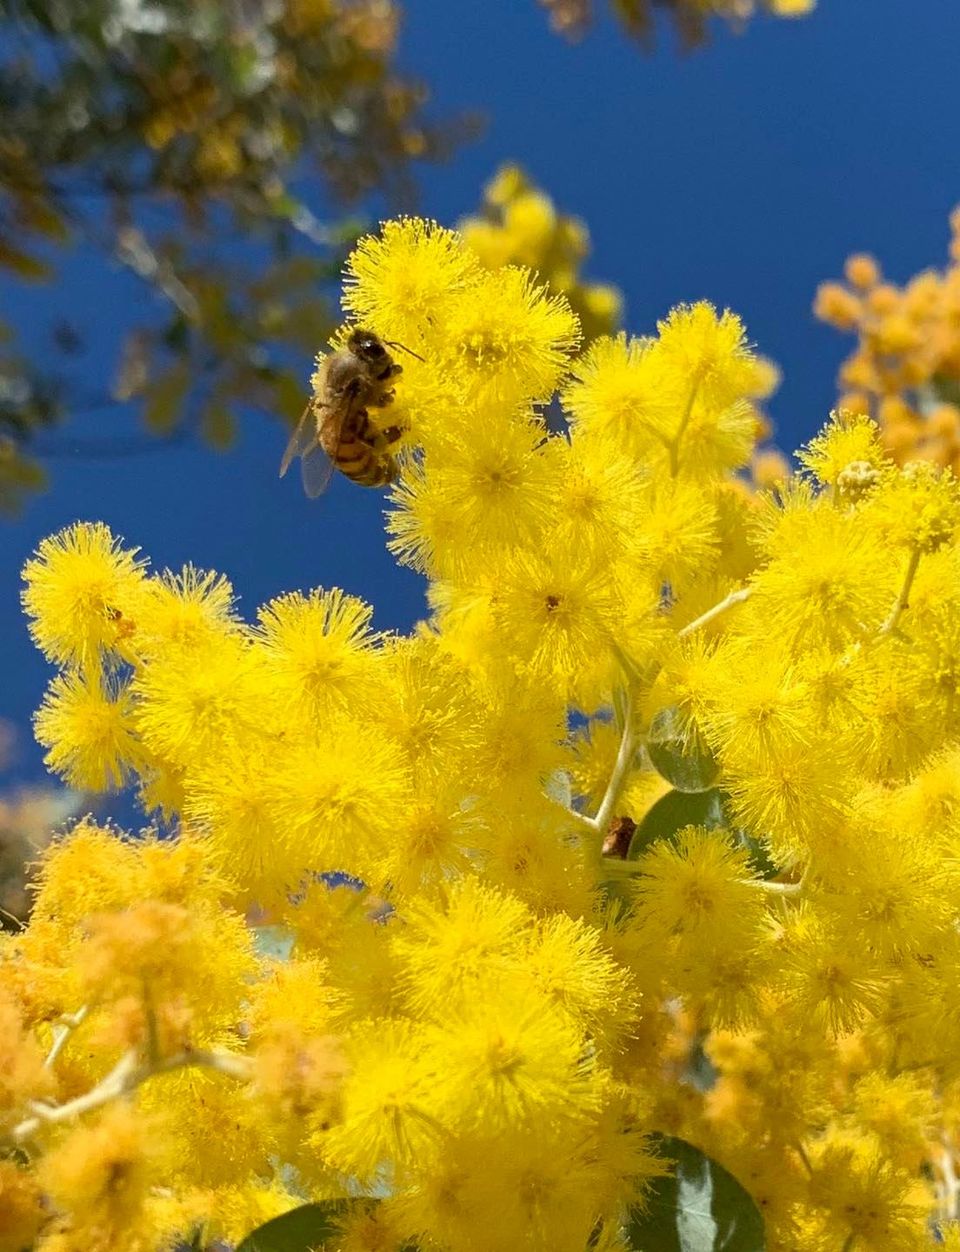 Bees enjoying the wattle